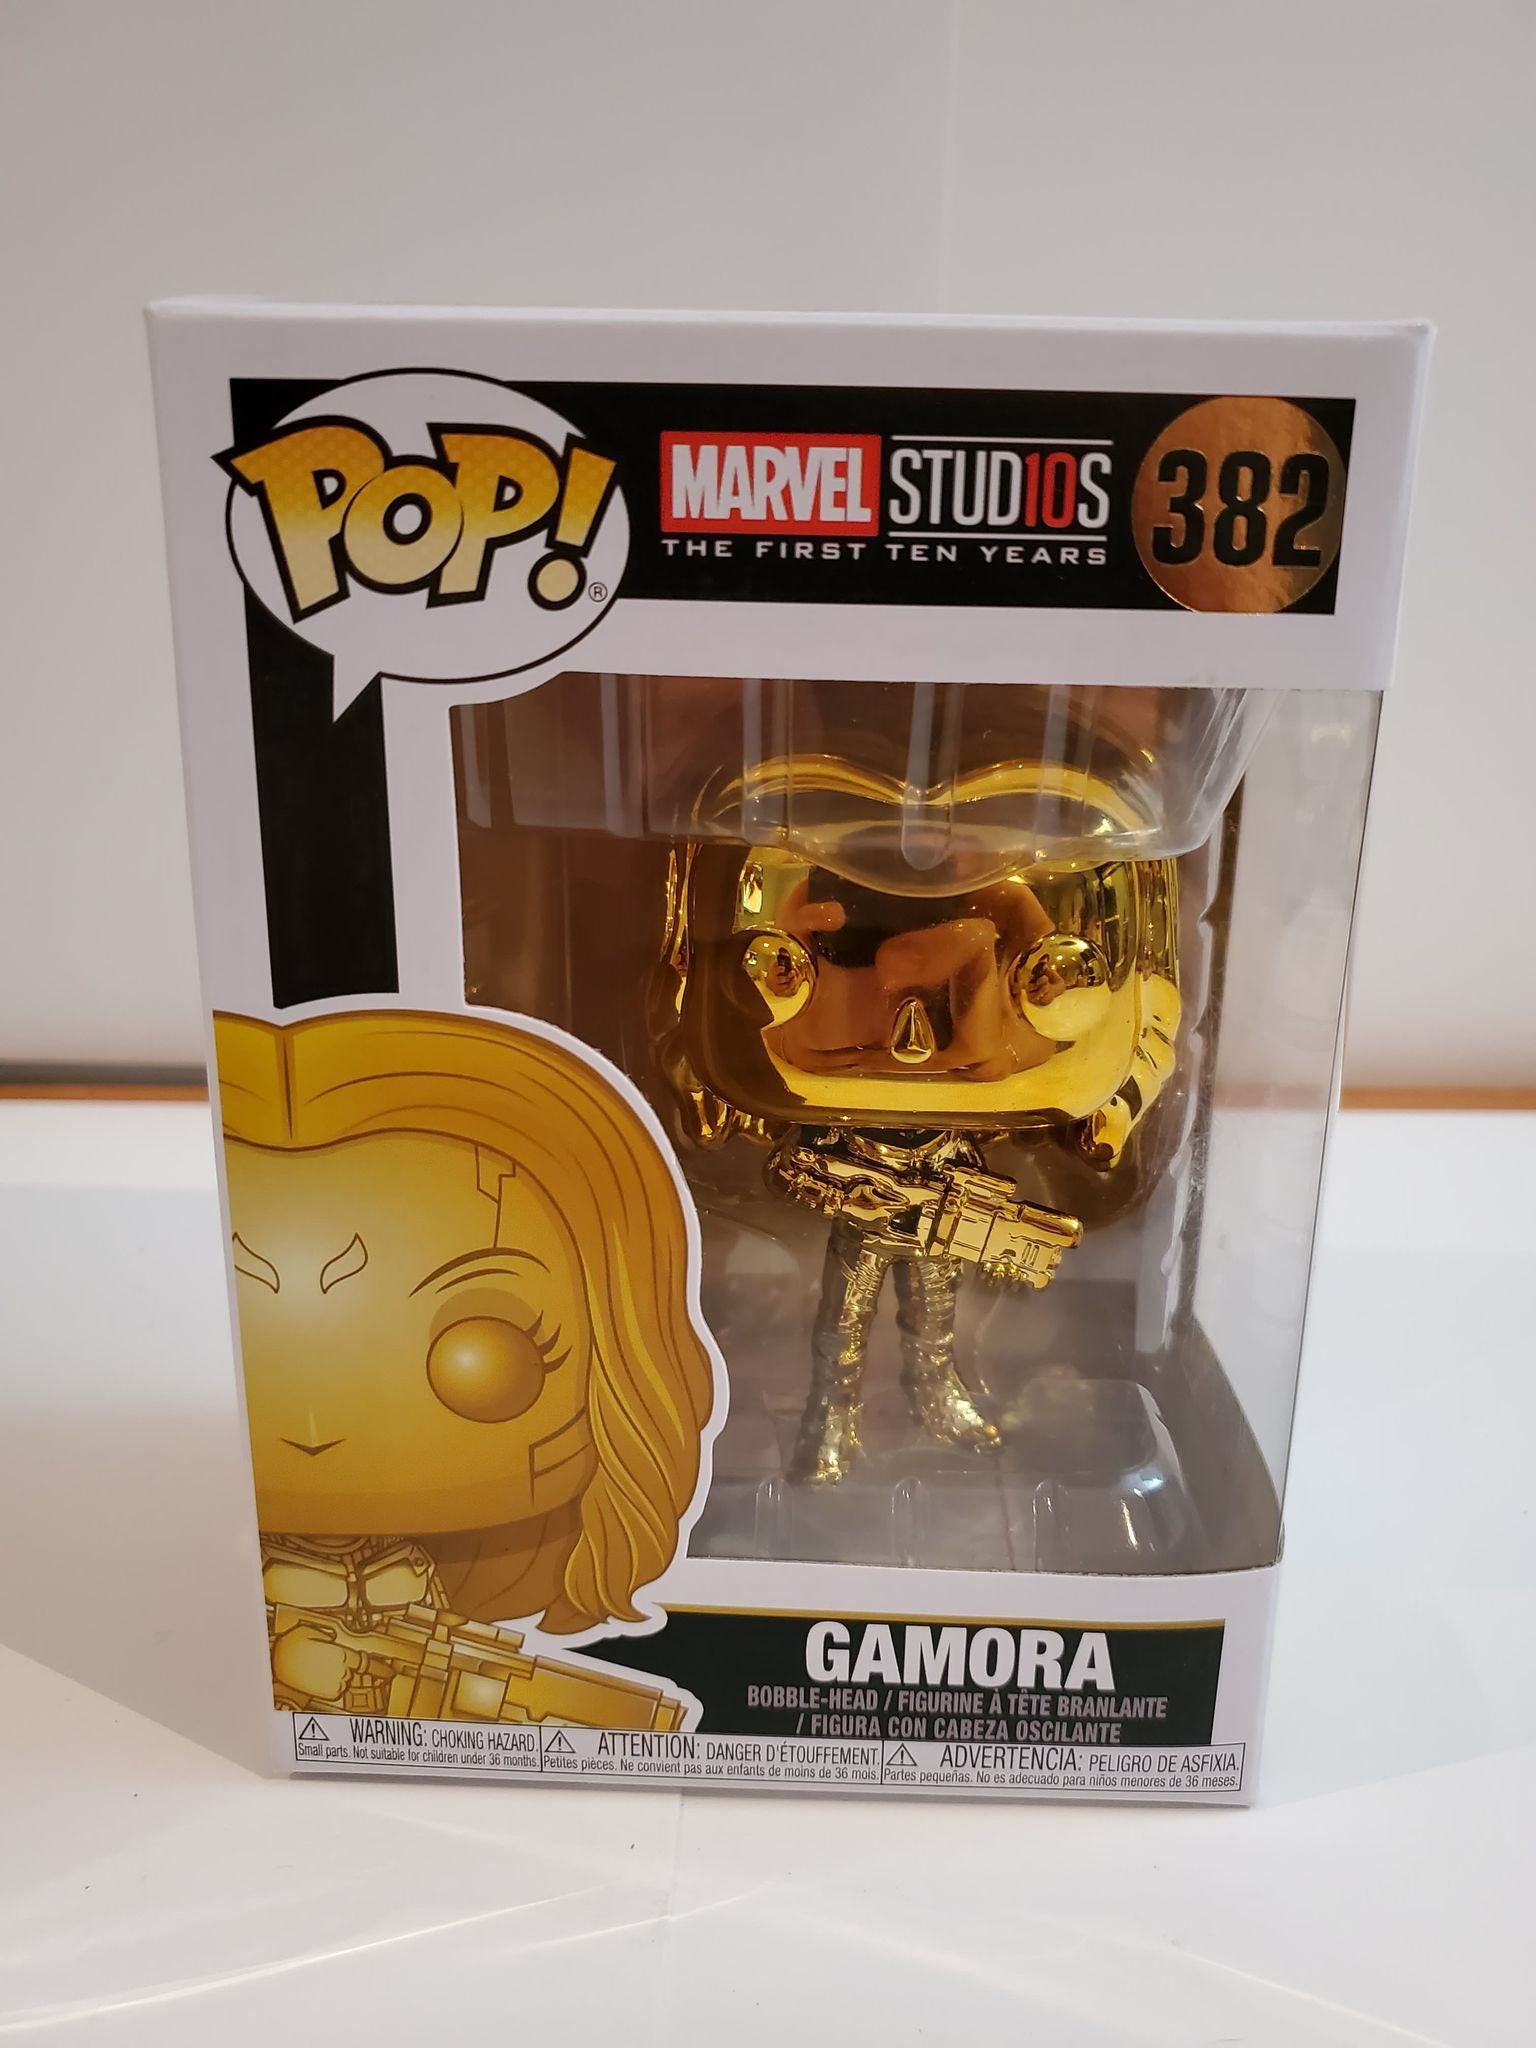 Gamora Bobble Head Funko Pop 382 Marvel Studios First 10 Years for sale online 